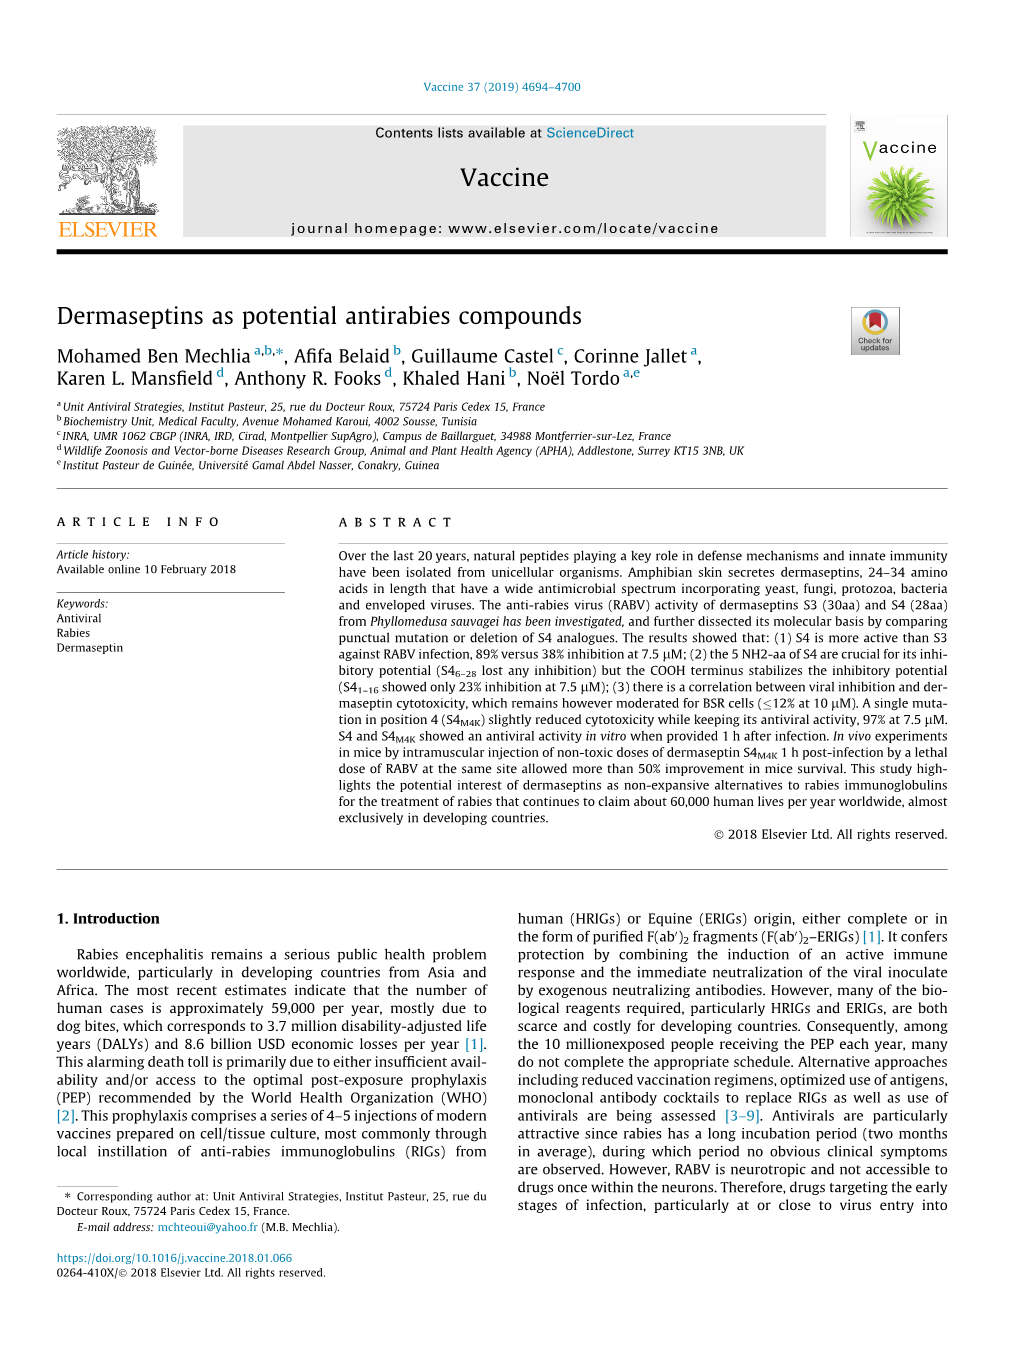 Dermaseptins As Potential Antirabies Compounds ⇑ Mohamed Ben Mechlia A,B, , Aﬁfa Belaid B, Guillaume Castel C, Corinne Jallet A, Karen L